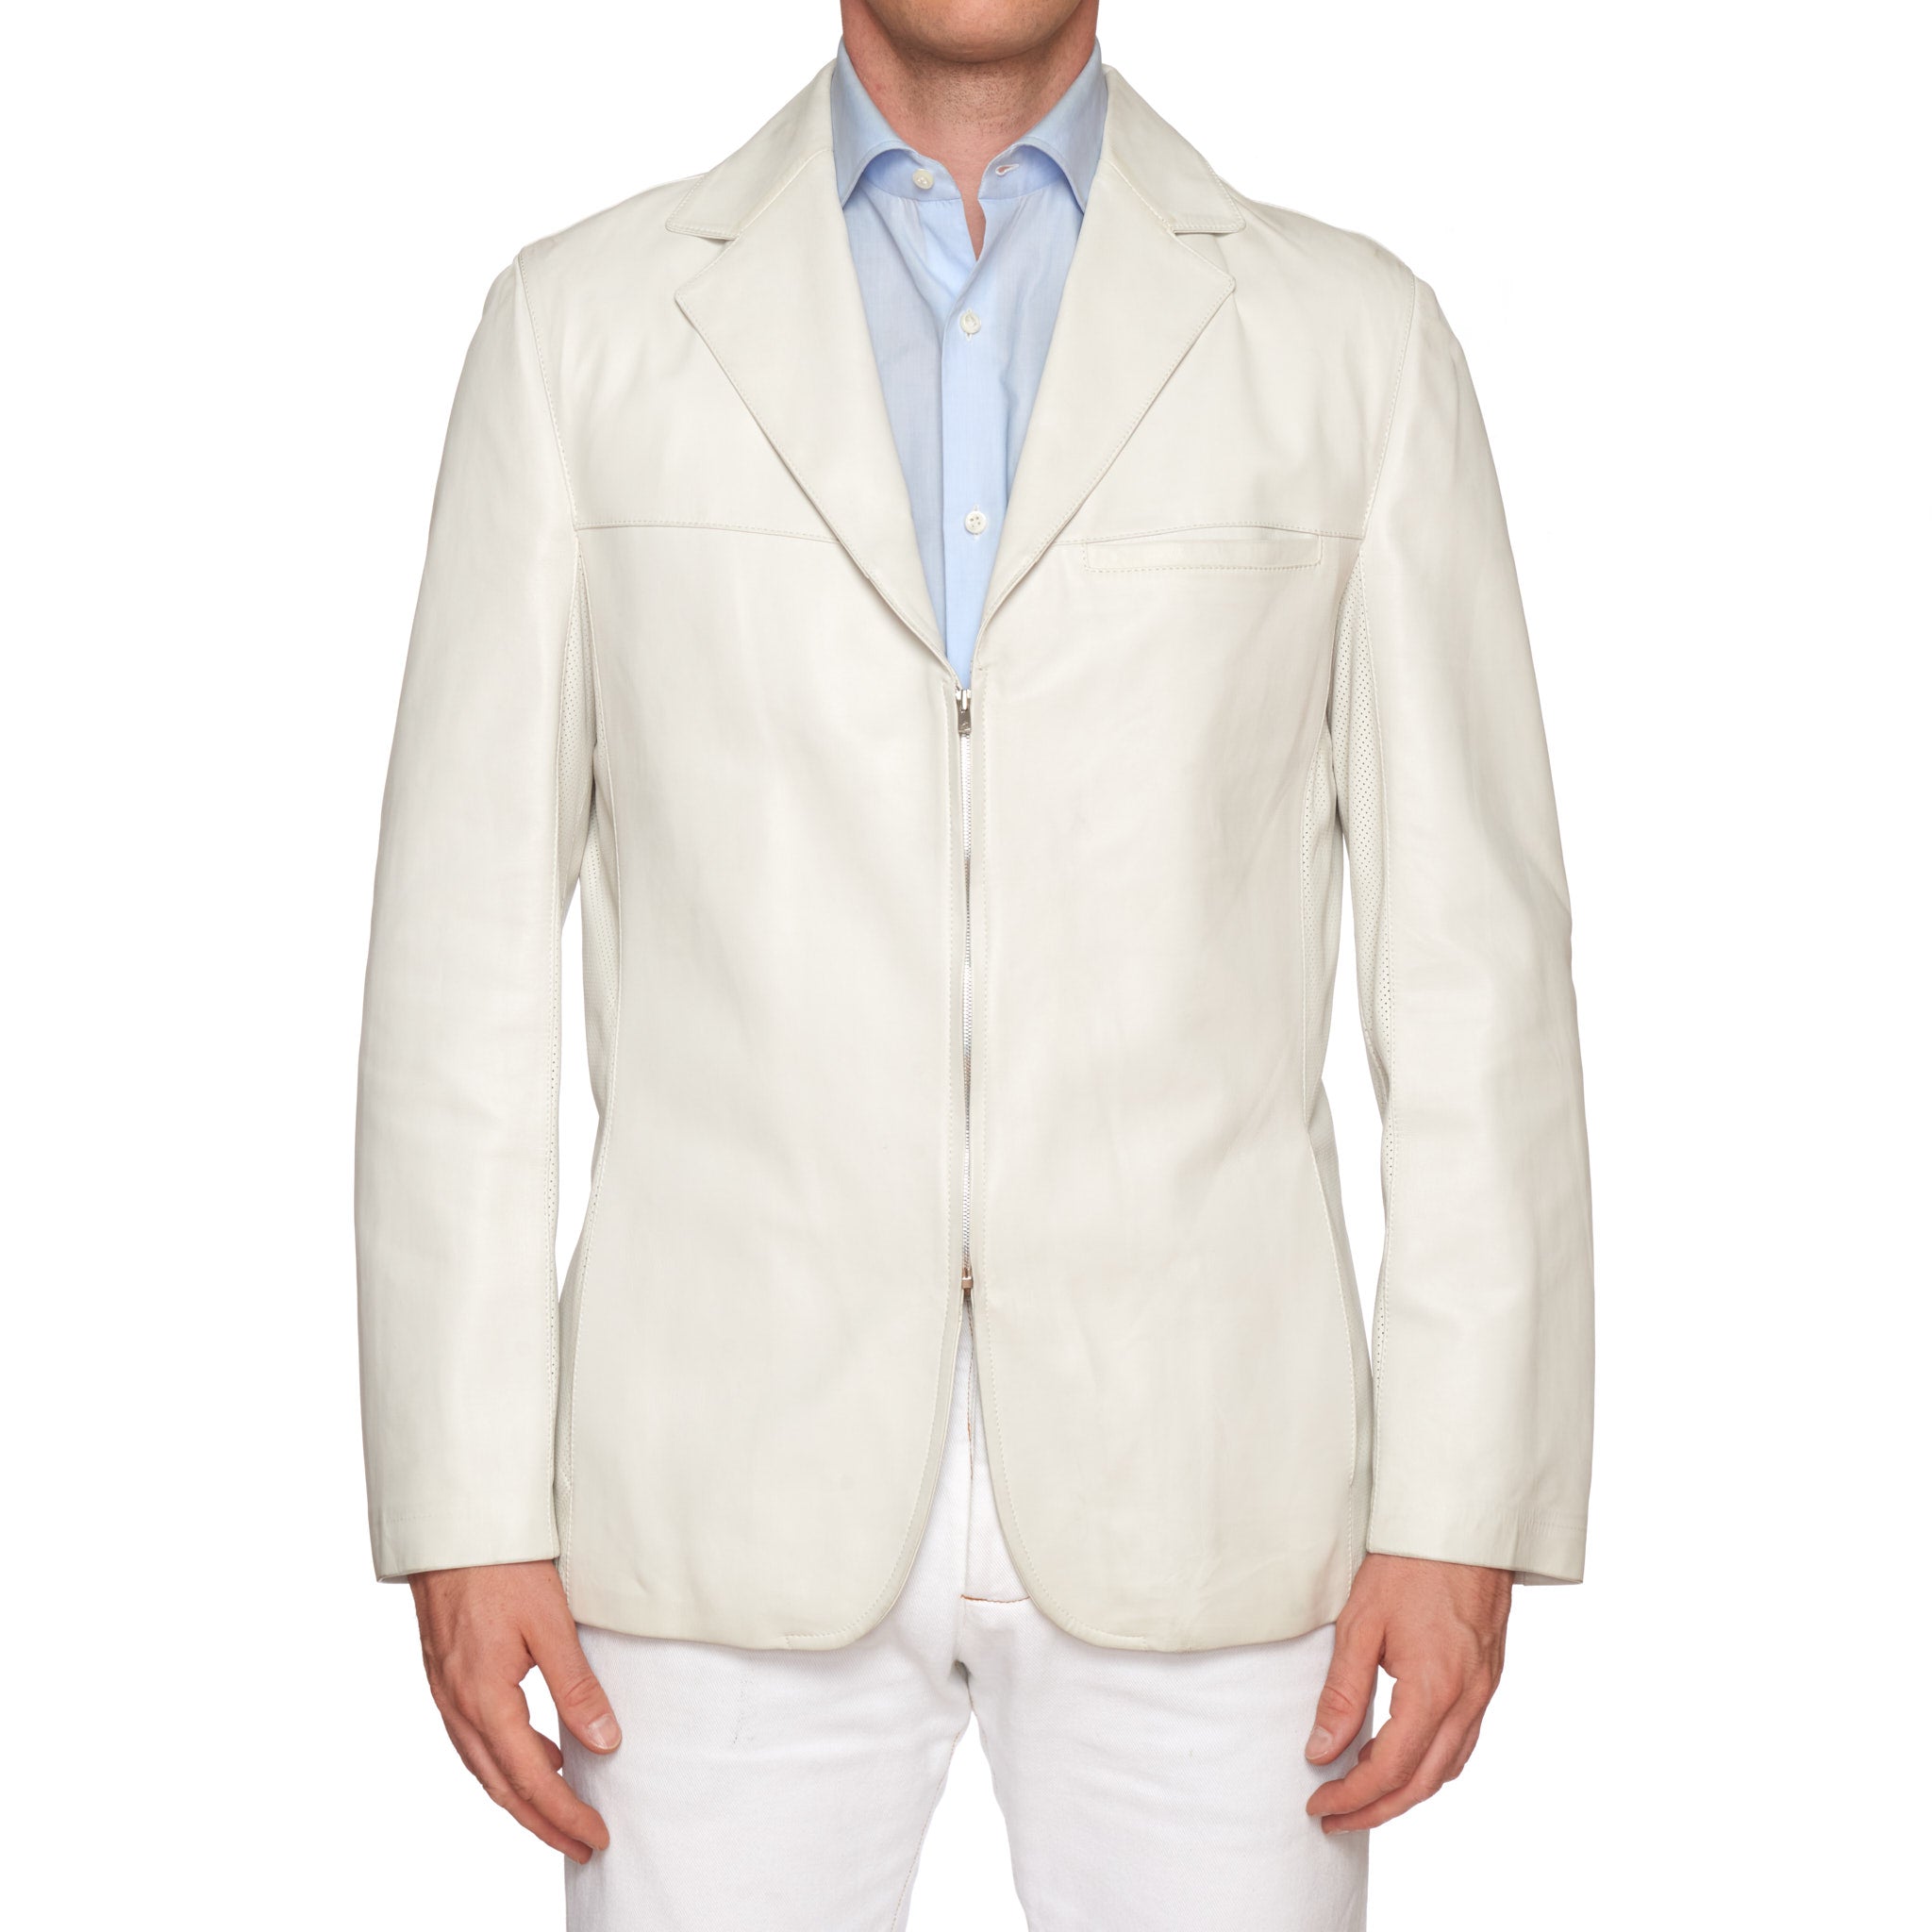 KITON Napoli Off-White Leather Jacket Coat with Perforated Details EU 50 US 40